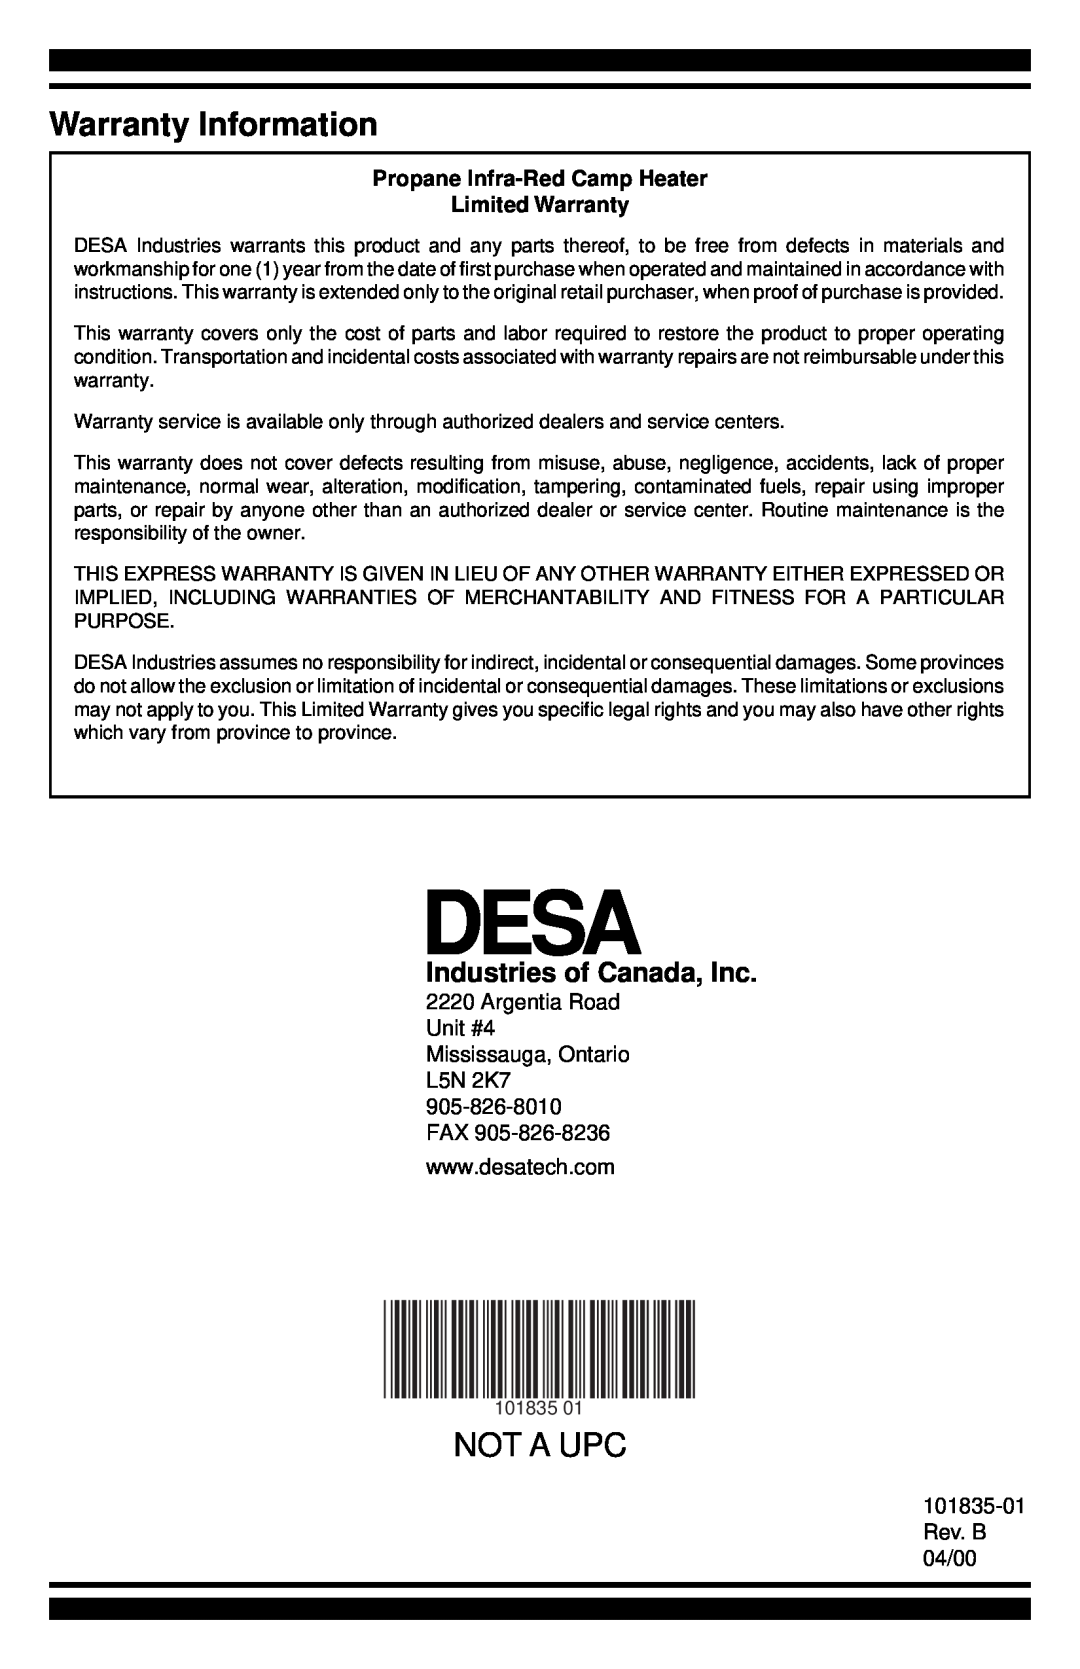 Desa CHD12B owner manual Warranty Information, Not A Upc, Industries of Canada, Inc 